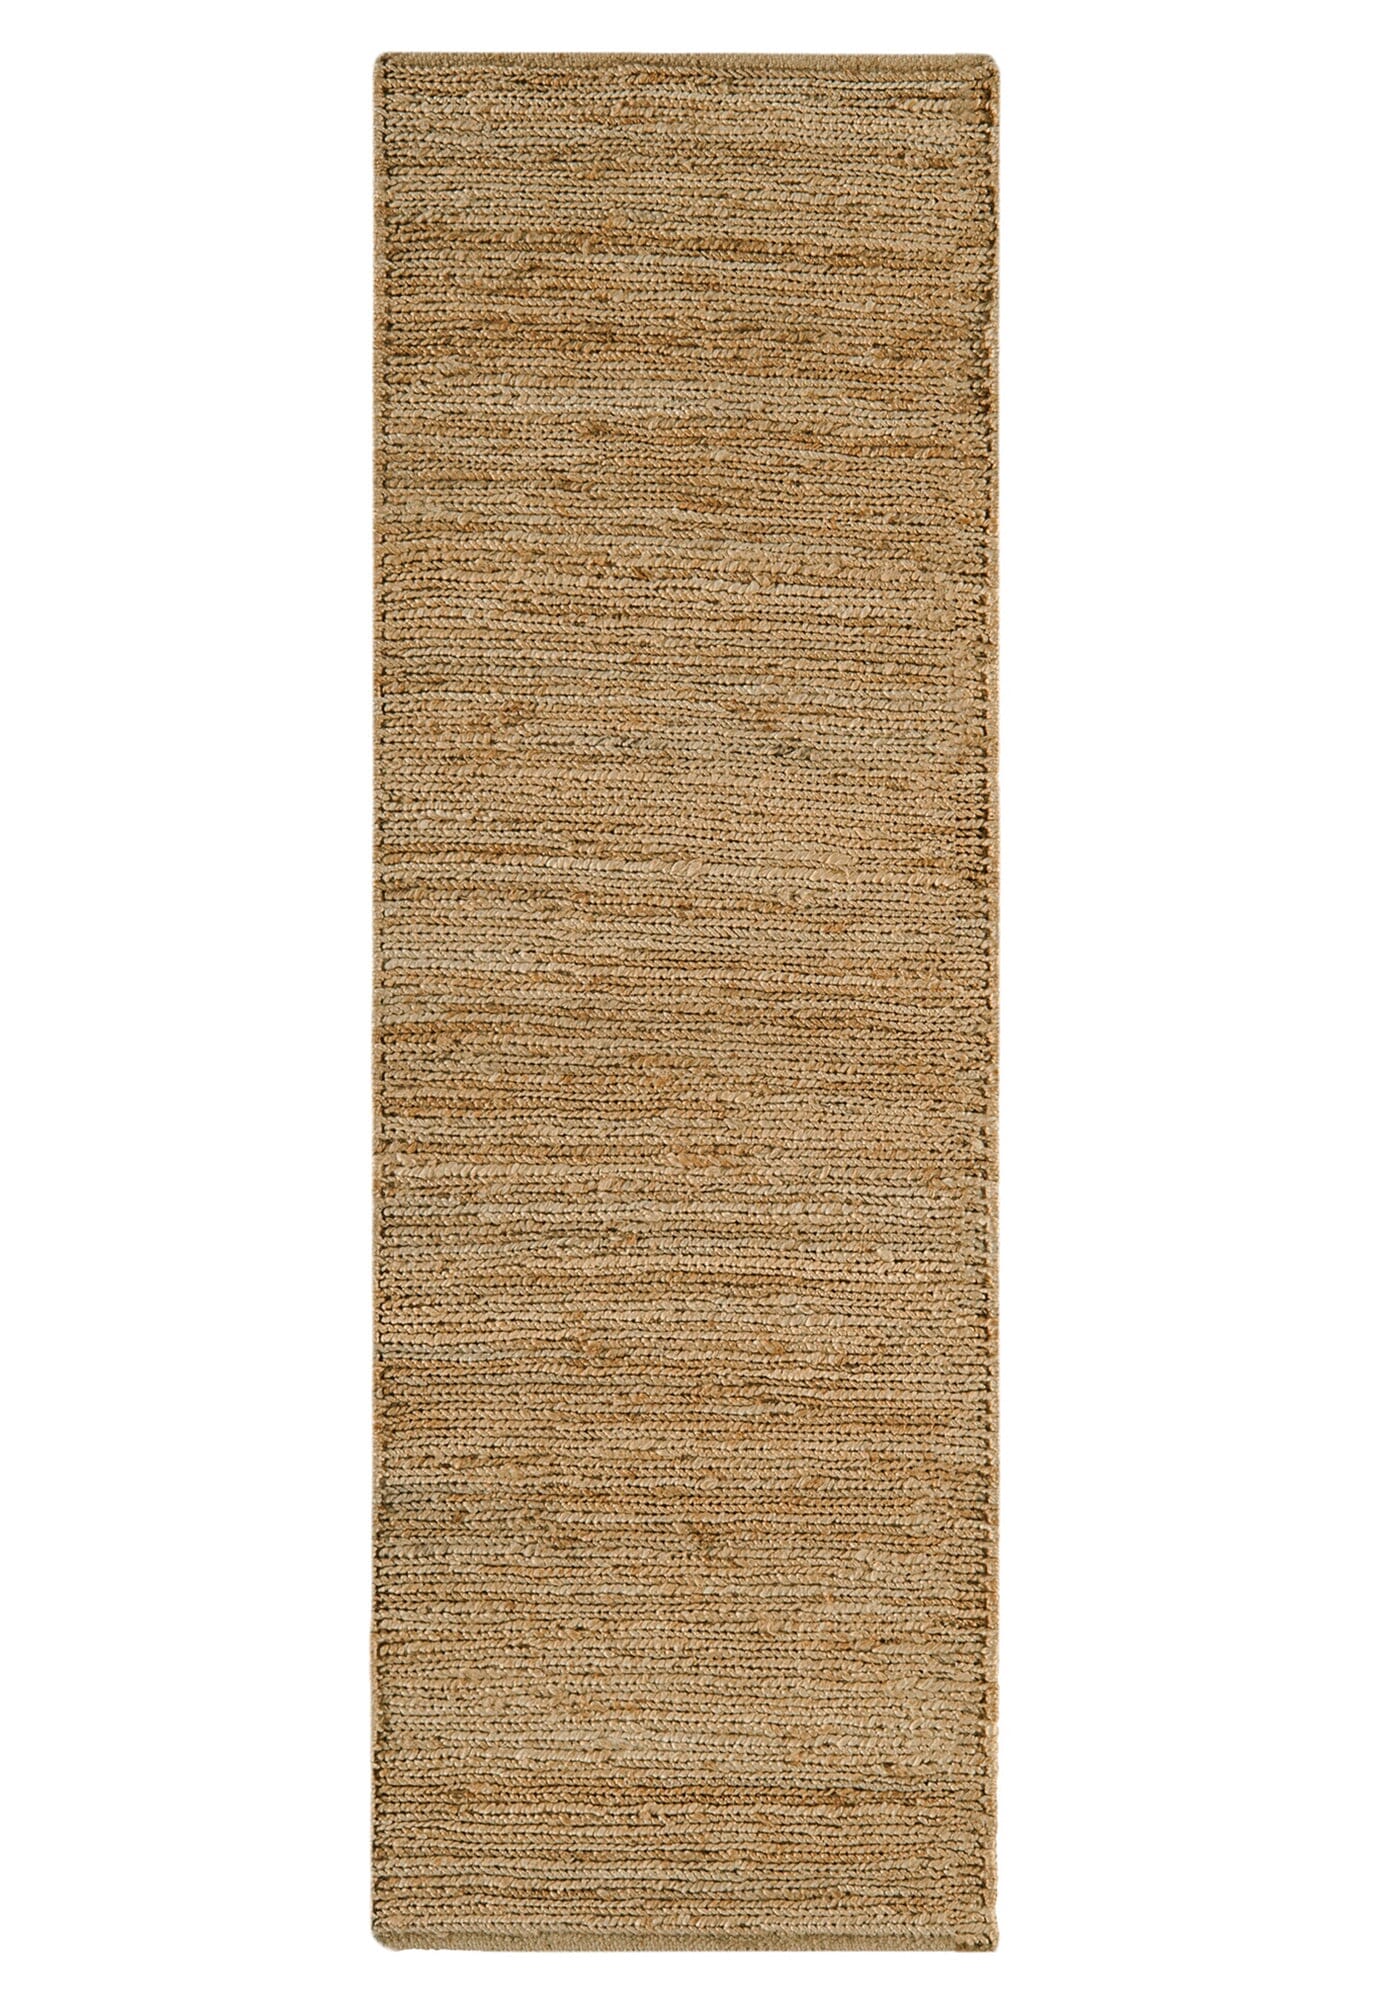 Asiatic Carpets Soumak Hand Woven Rug Natural - 160 x 230cm